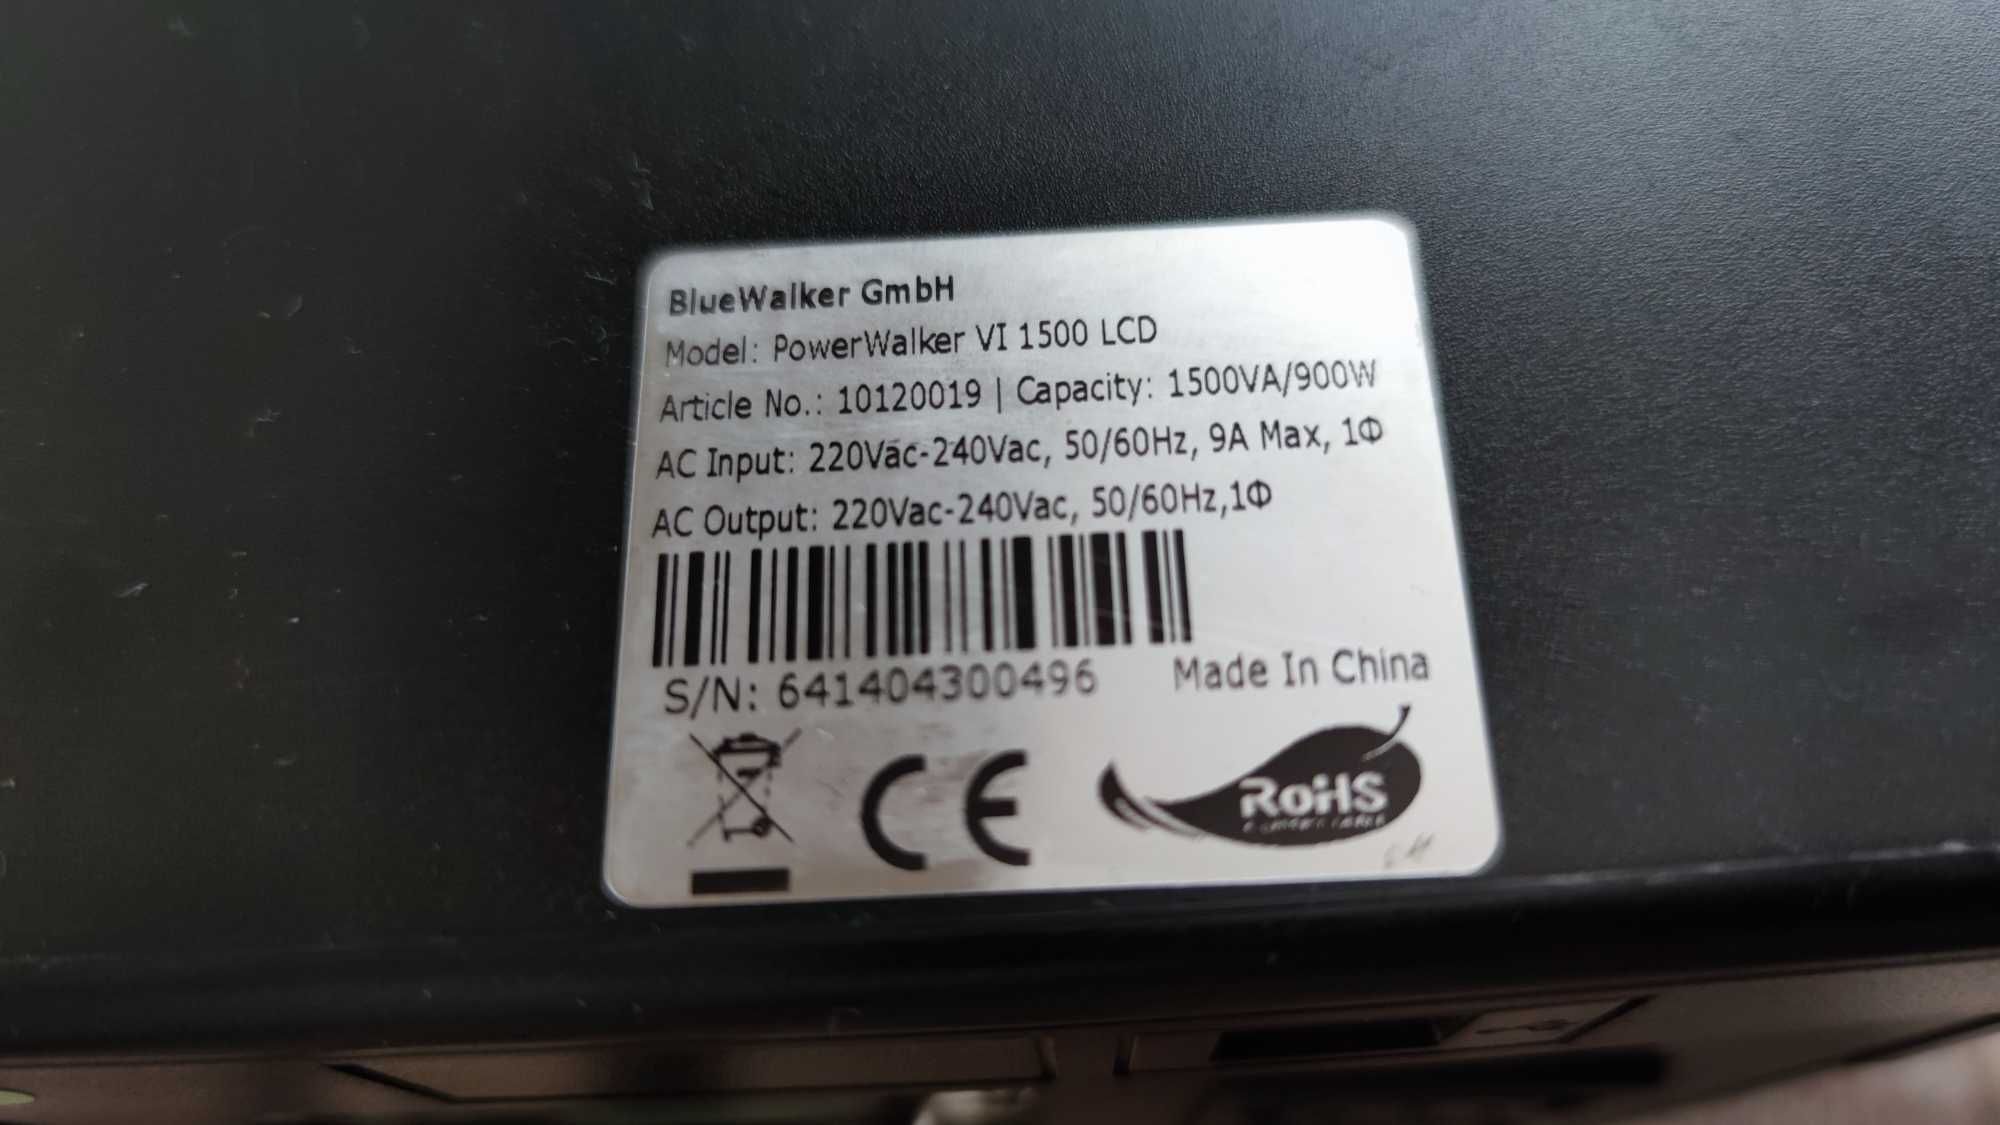 УПС Power walker VI 1500 LCD 900w